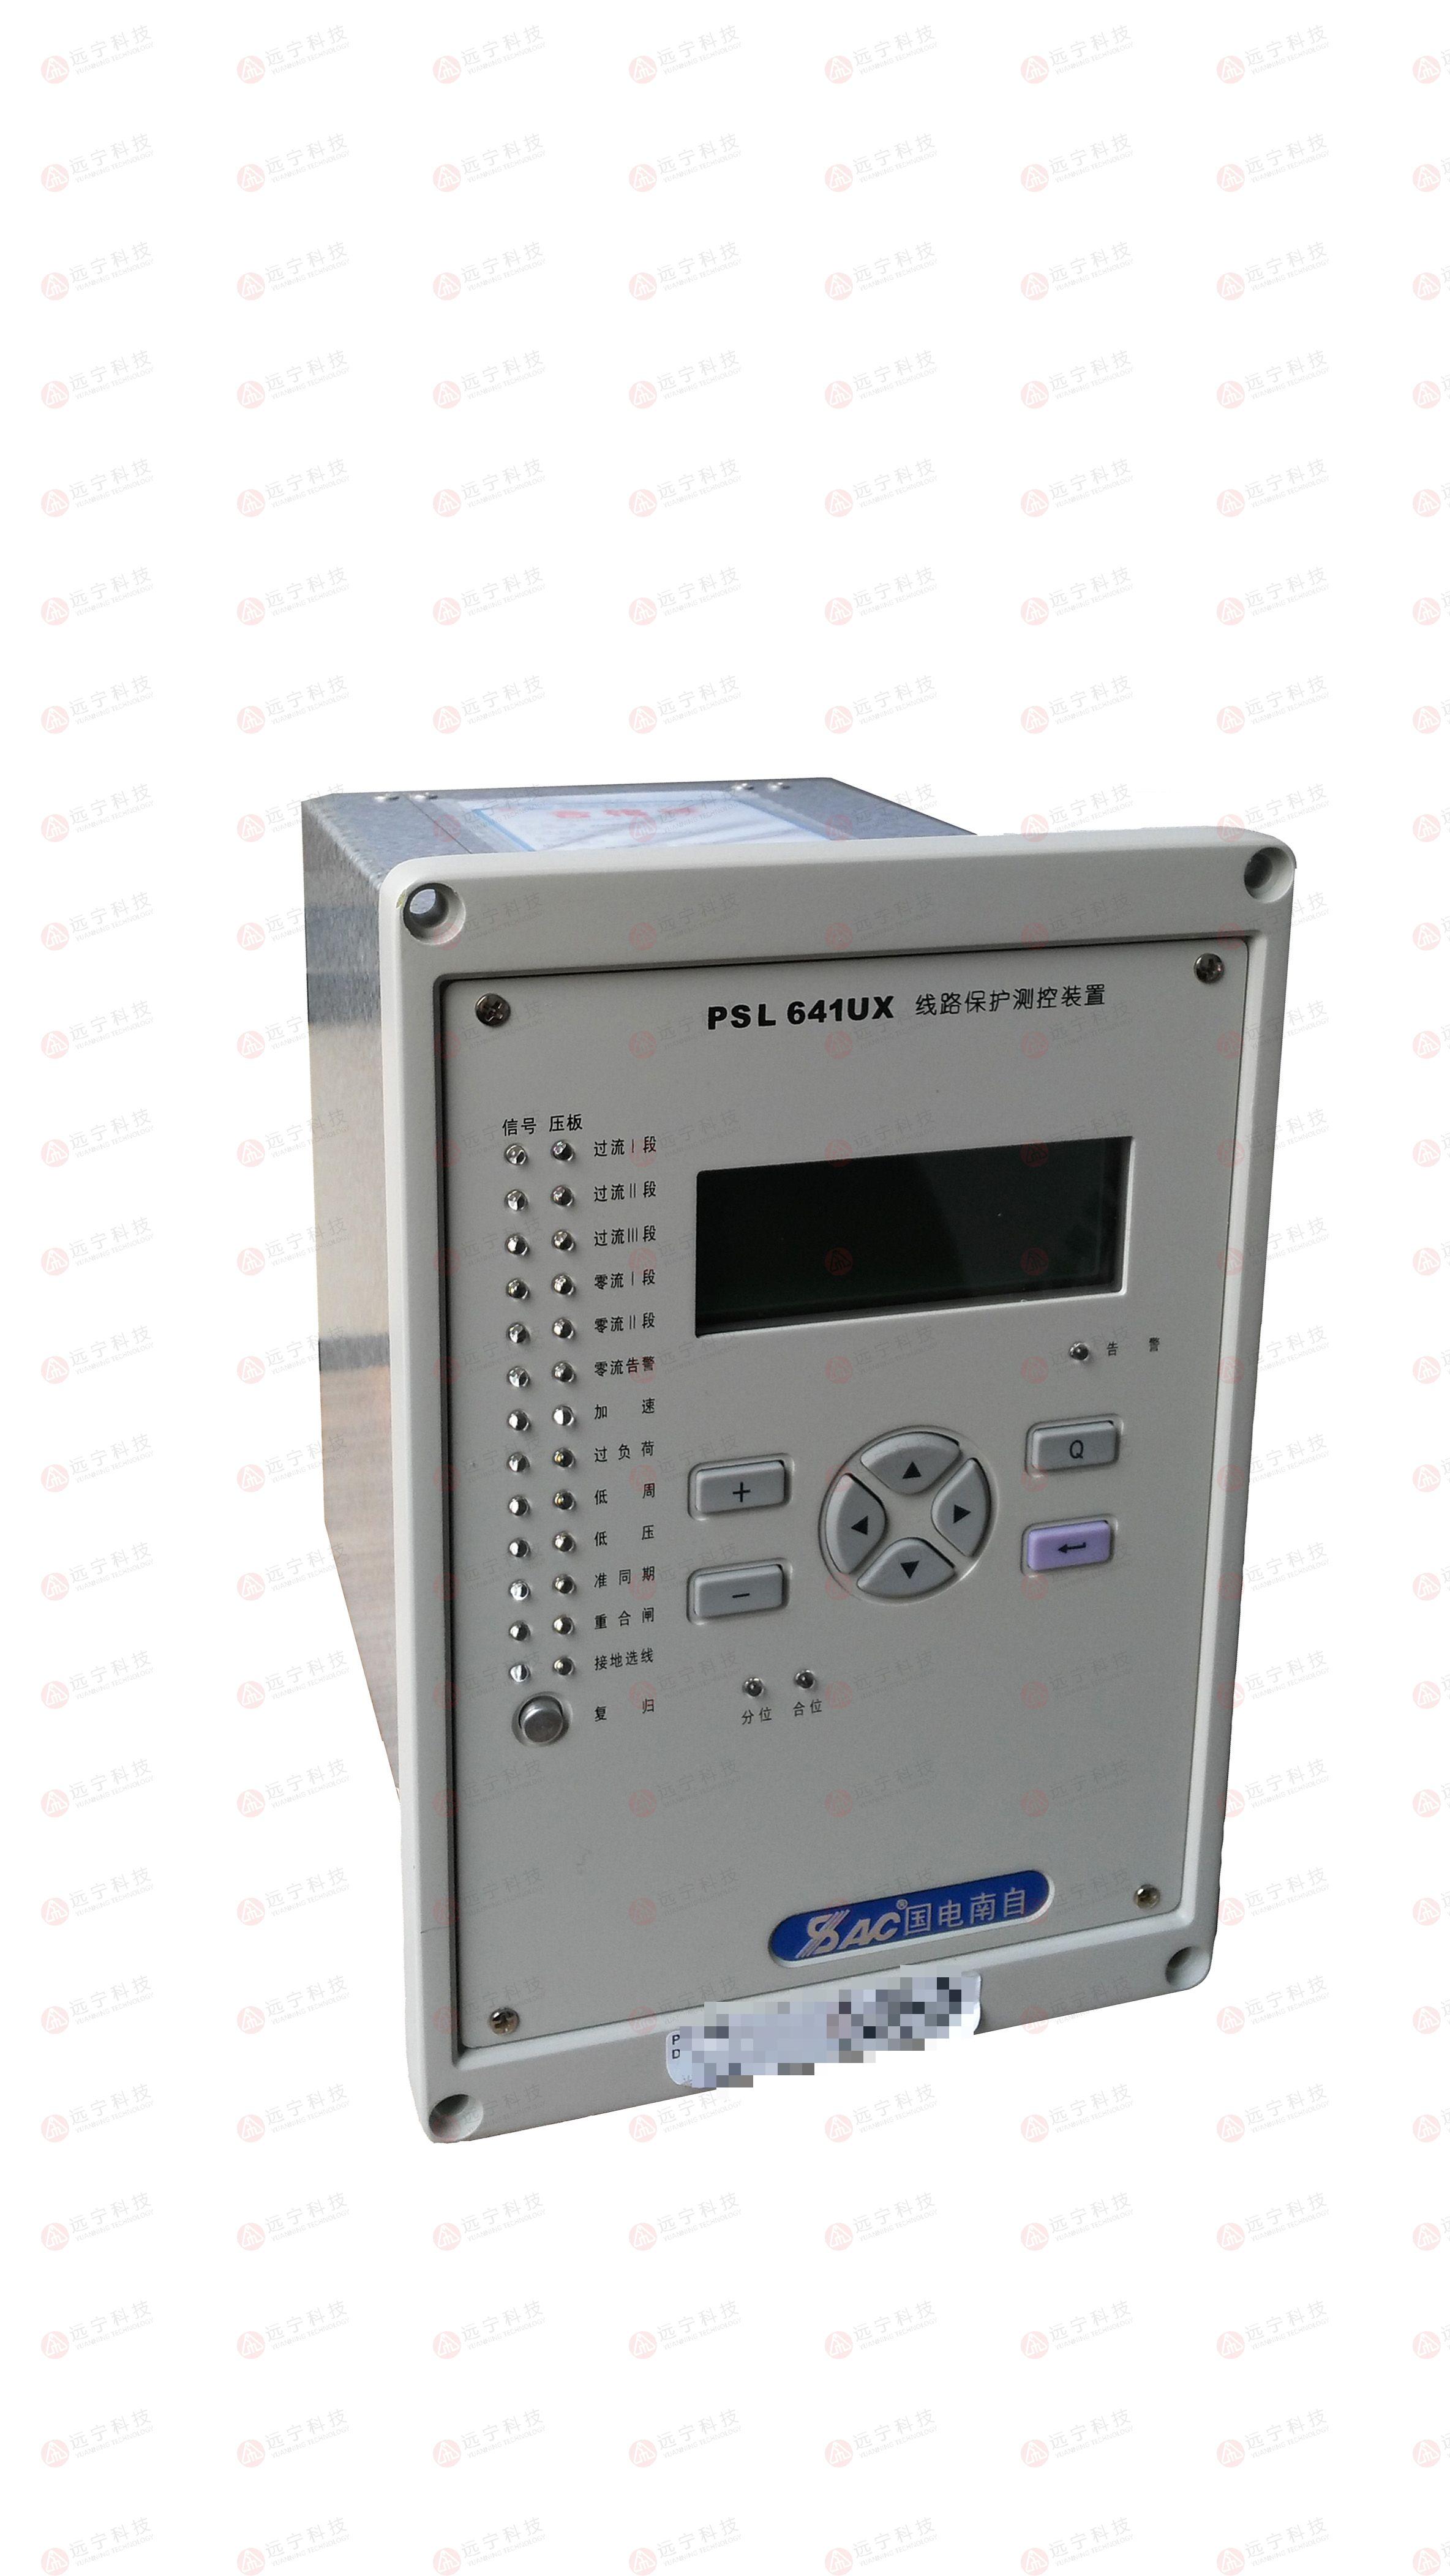 PST-642UX国电南自变压器保护测控装置